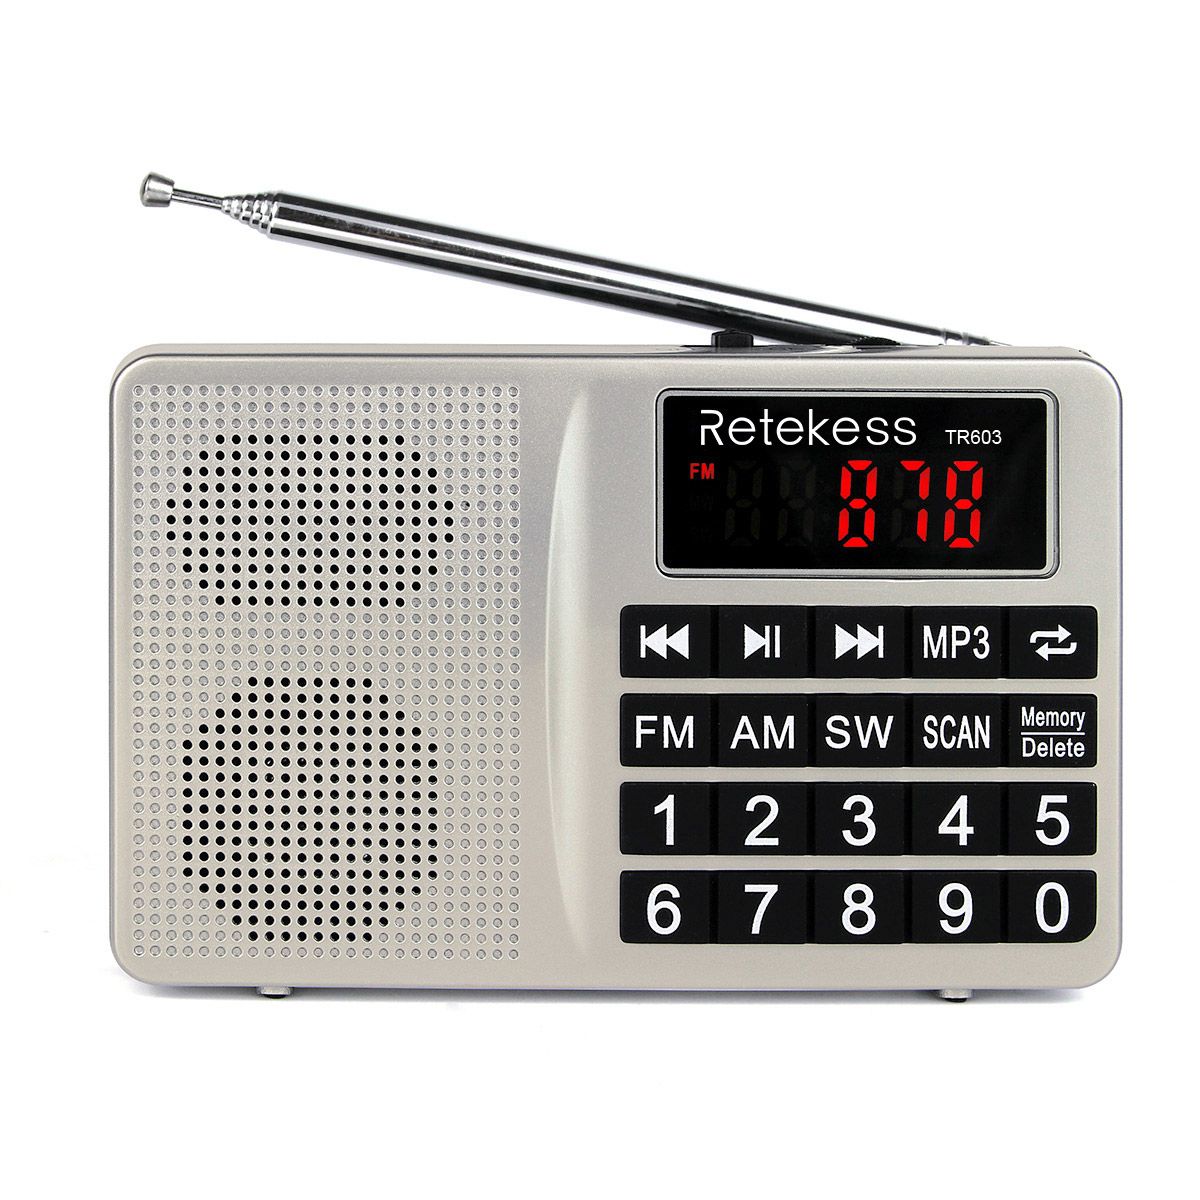 Retekess-Digital-Display-FM-AM-SW-Radio-AUX-MP3-Audio-Player-Speaker-for-Mobile-Phone-Gift-for-famil-1448810